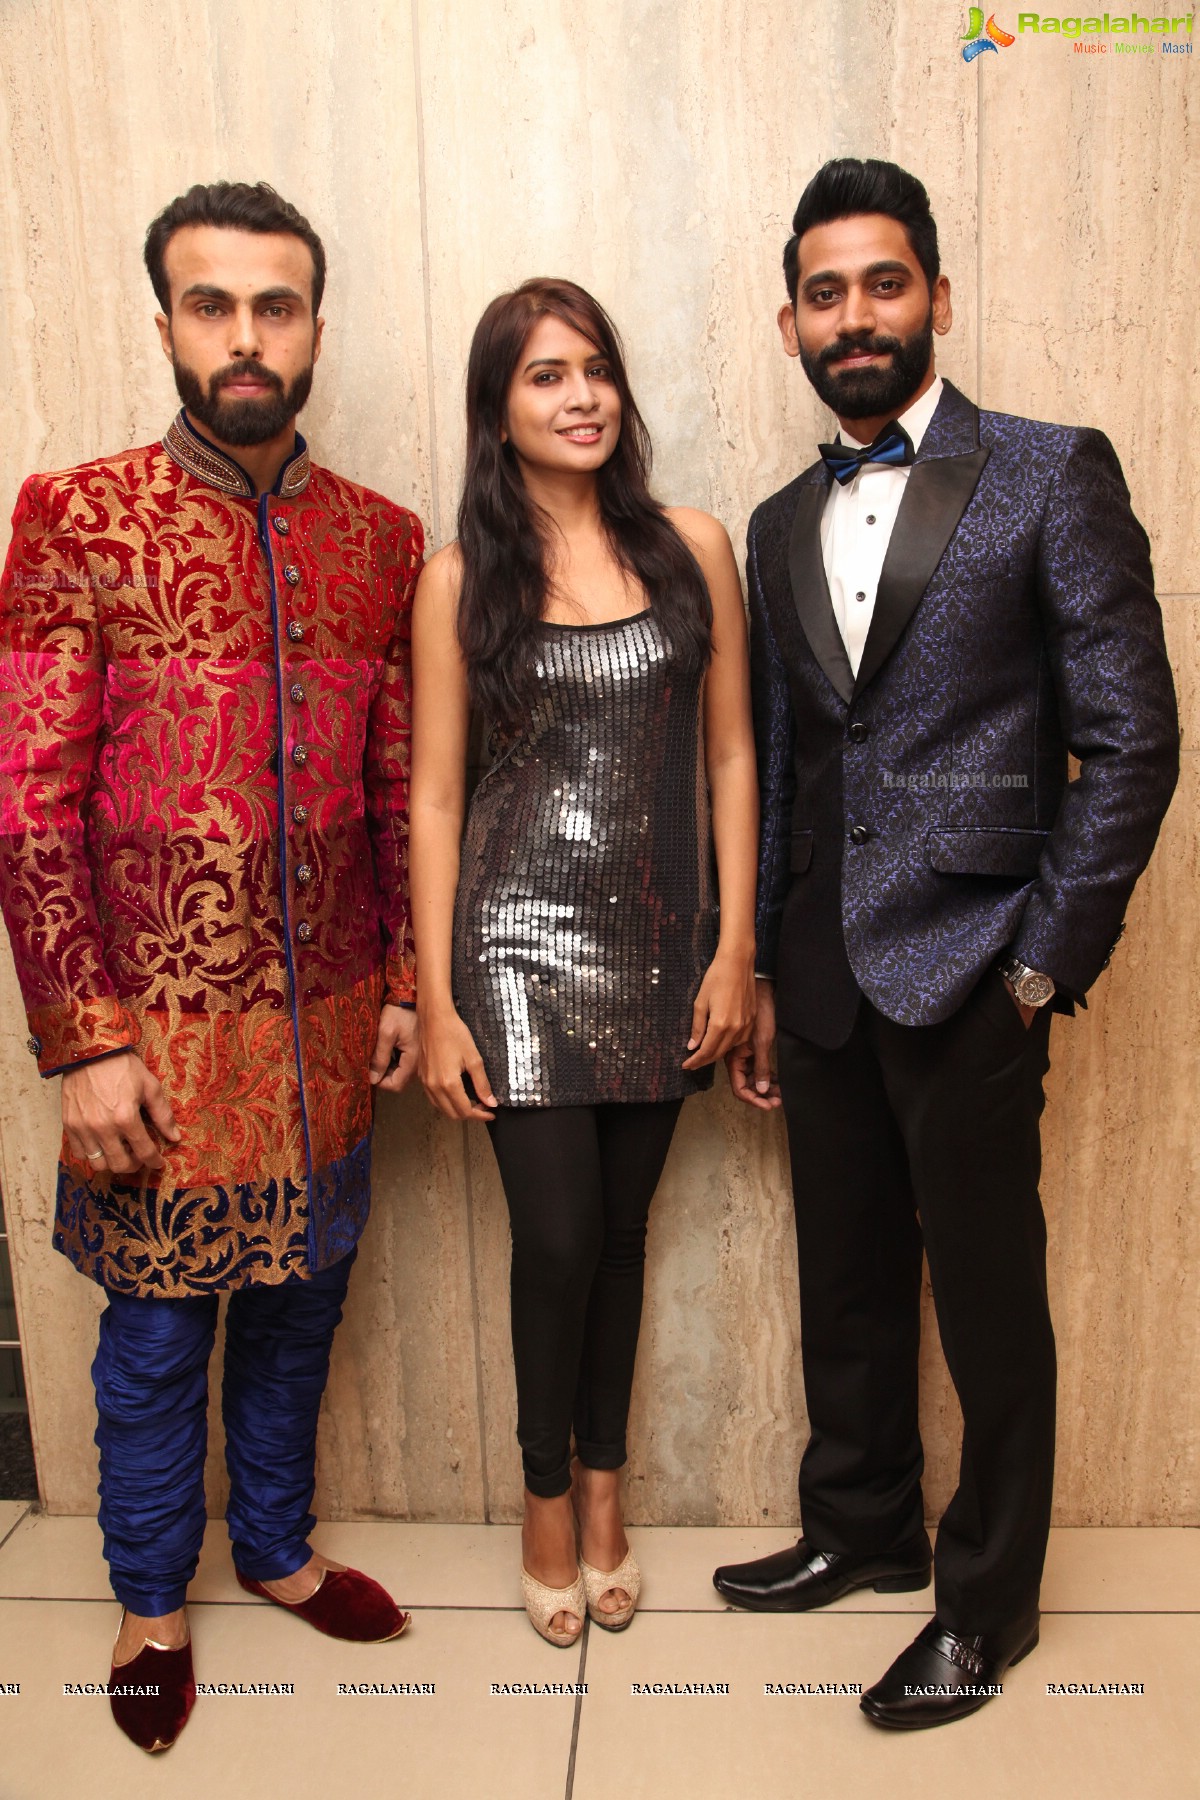 Hyderabad Fashion Week 2015 Curtain Raiser